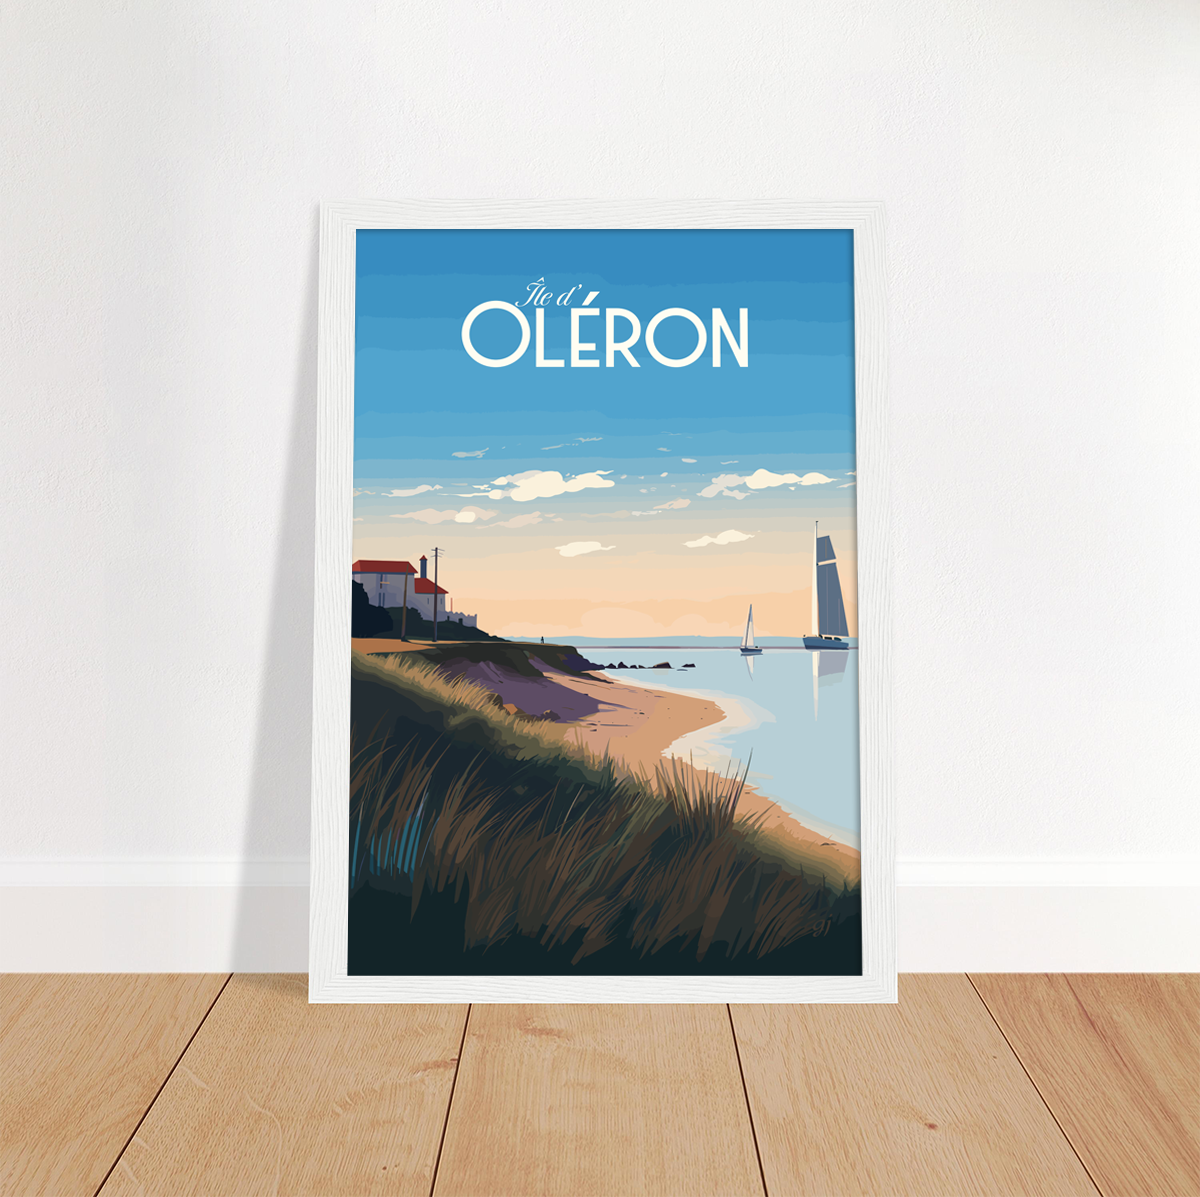 Oléron - Plage poster by bon voyage design